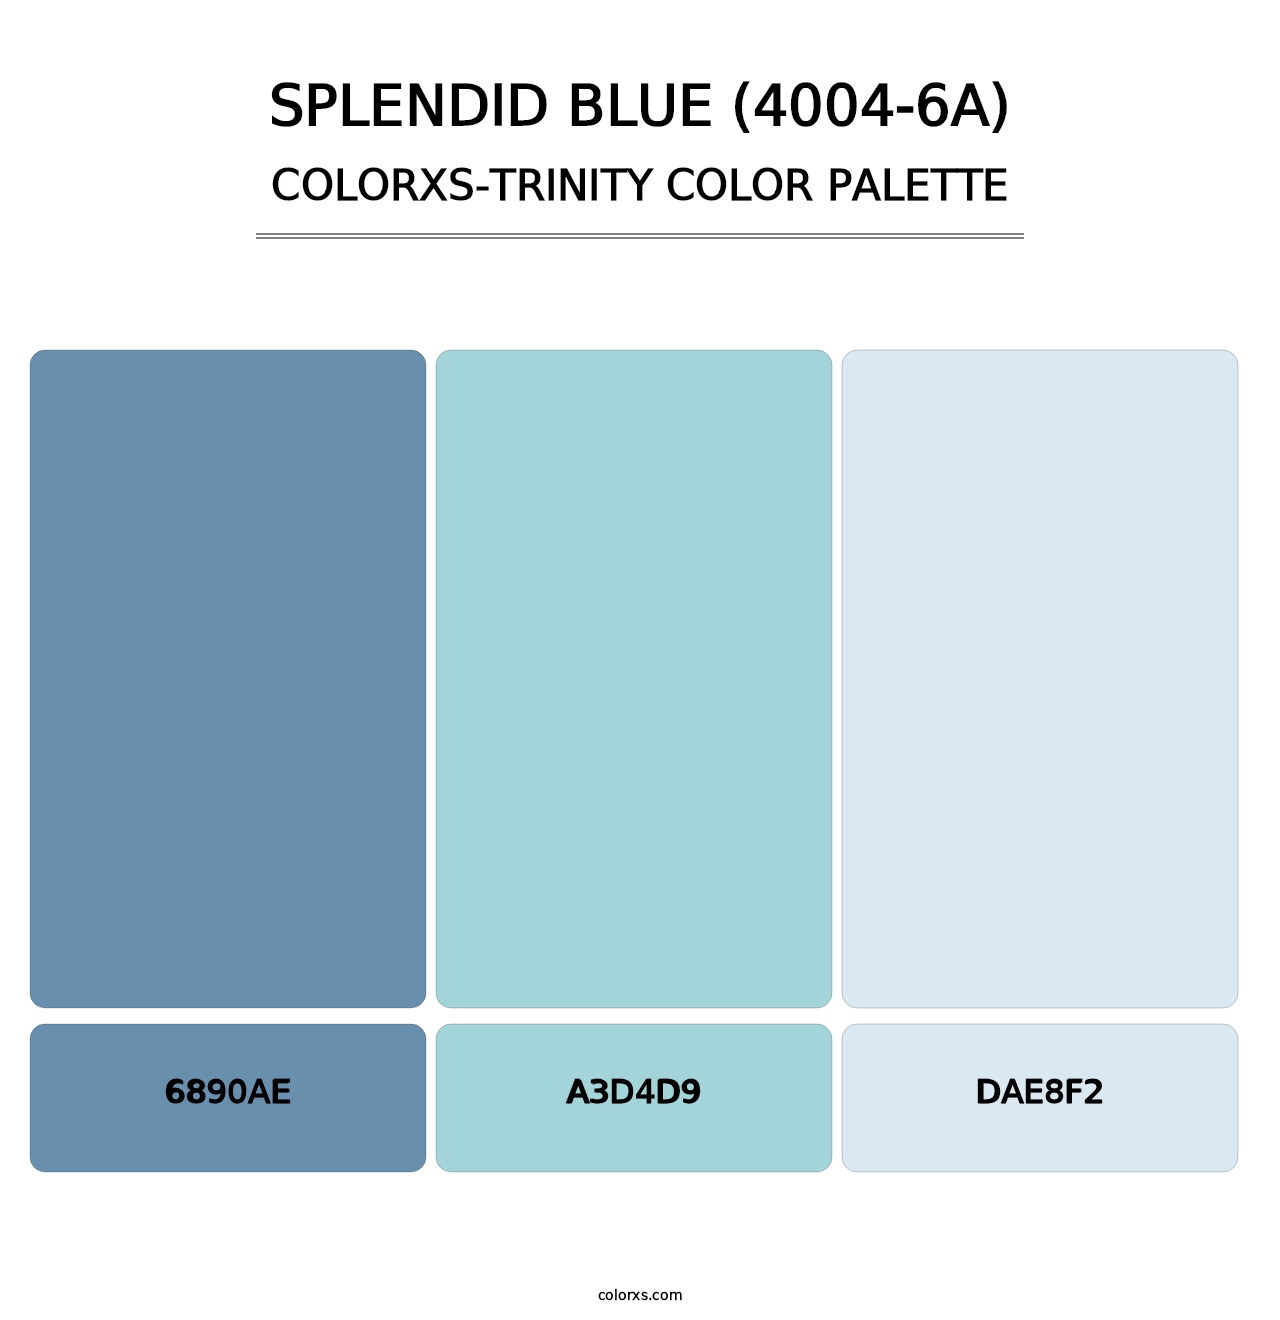 Splendid Blue (4004-6A) - Colorxs Trinity Palette